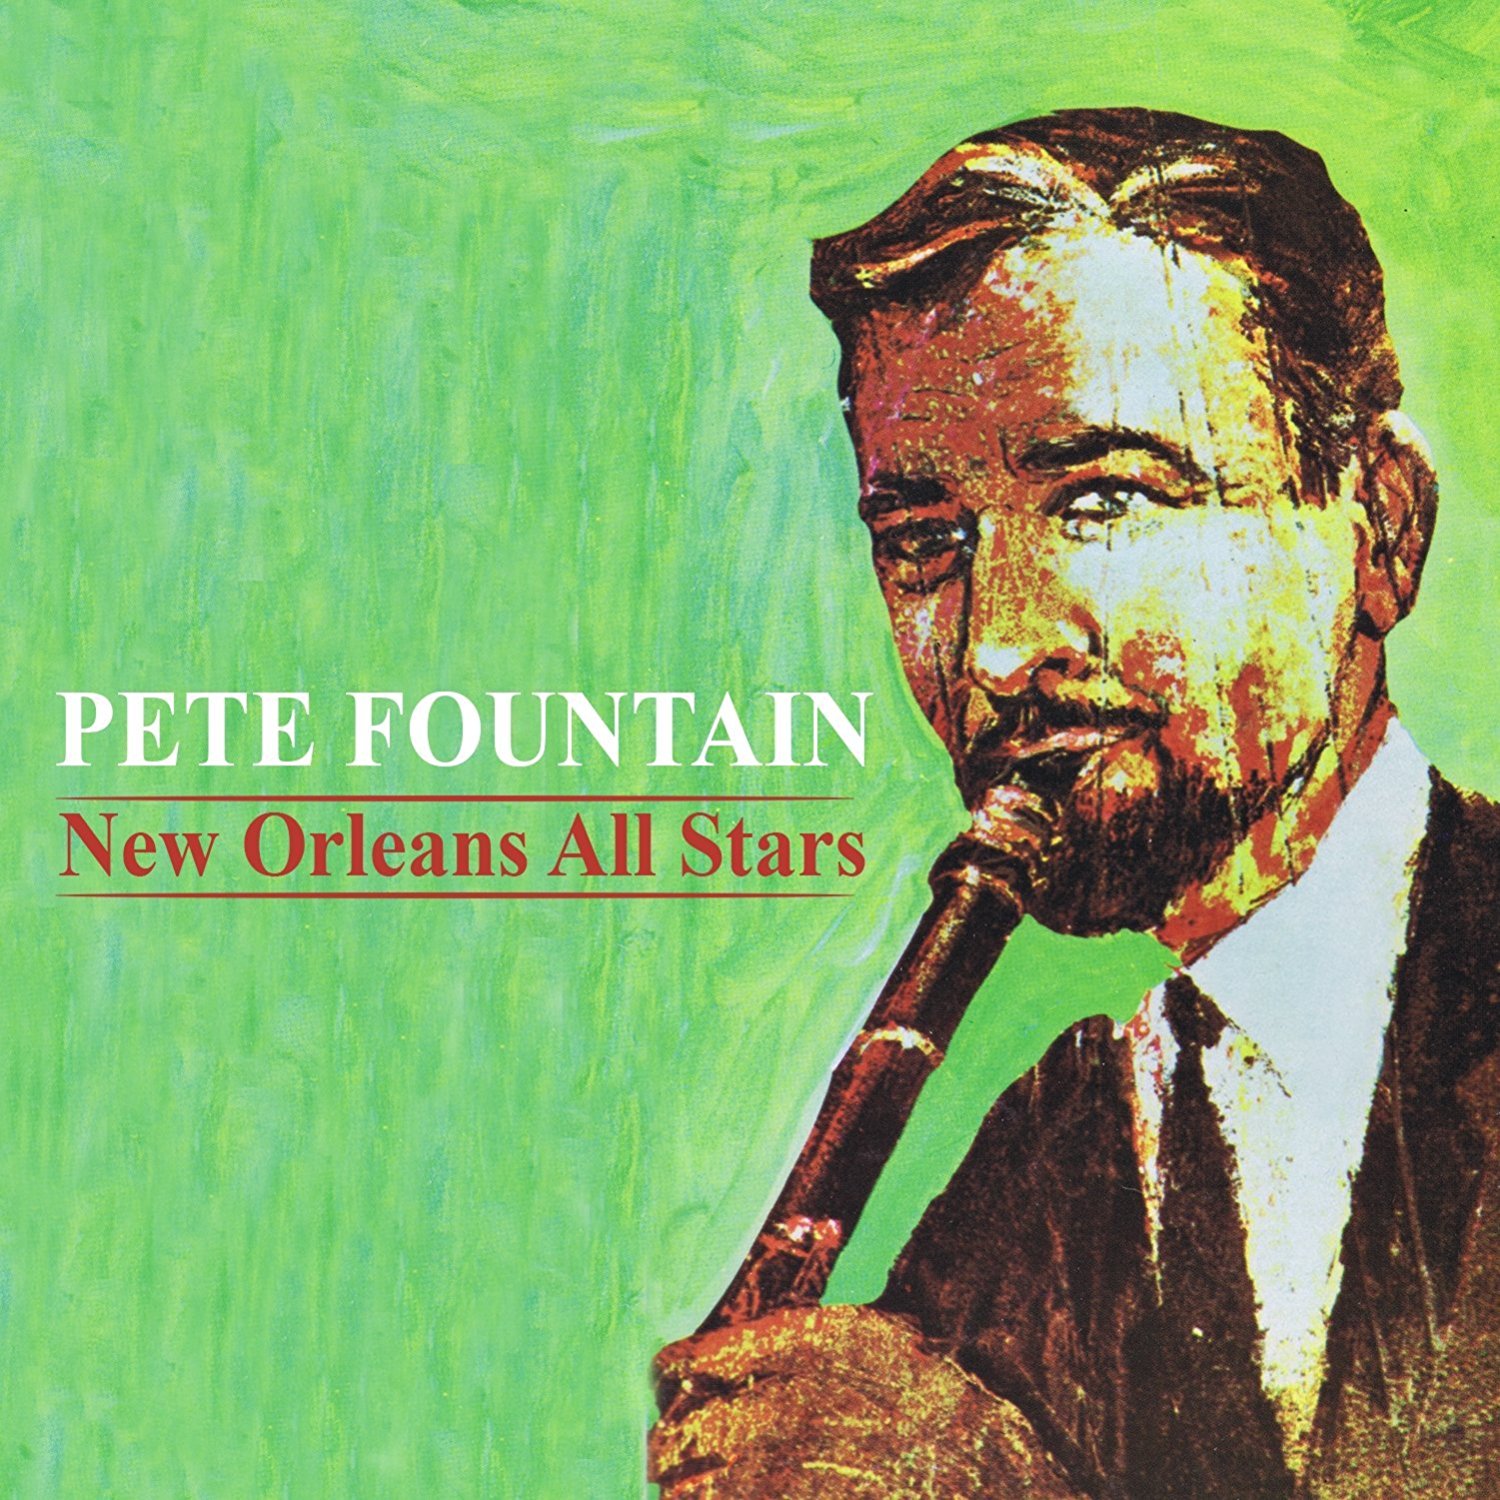 Pete Fountain - New Orleans All Stars (1962/2017) [HDTracks FLAC 24bit/44,1kHz]